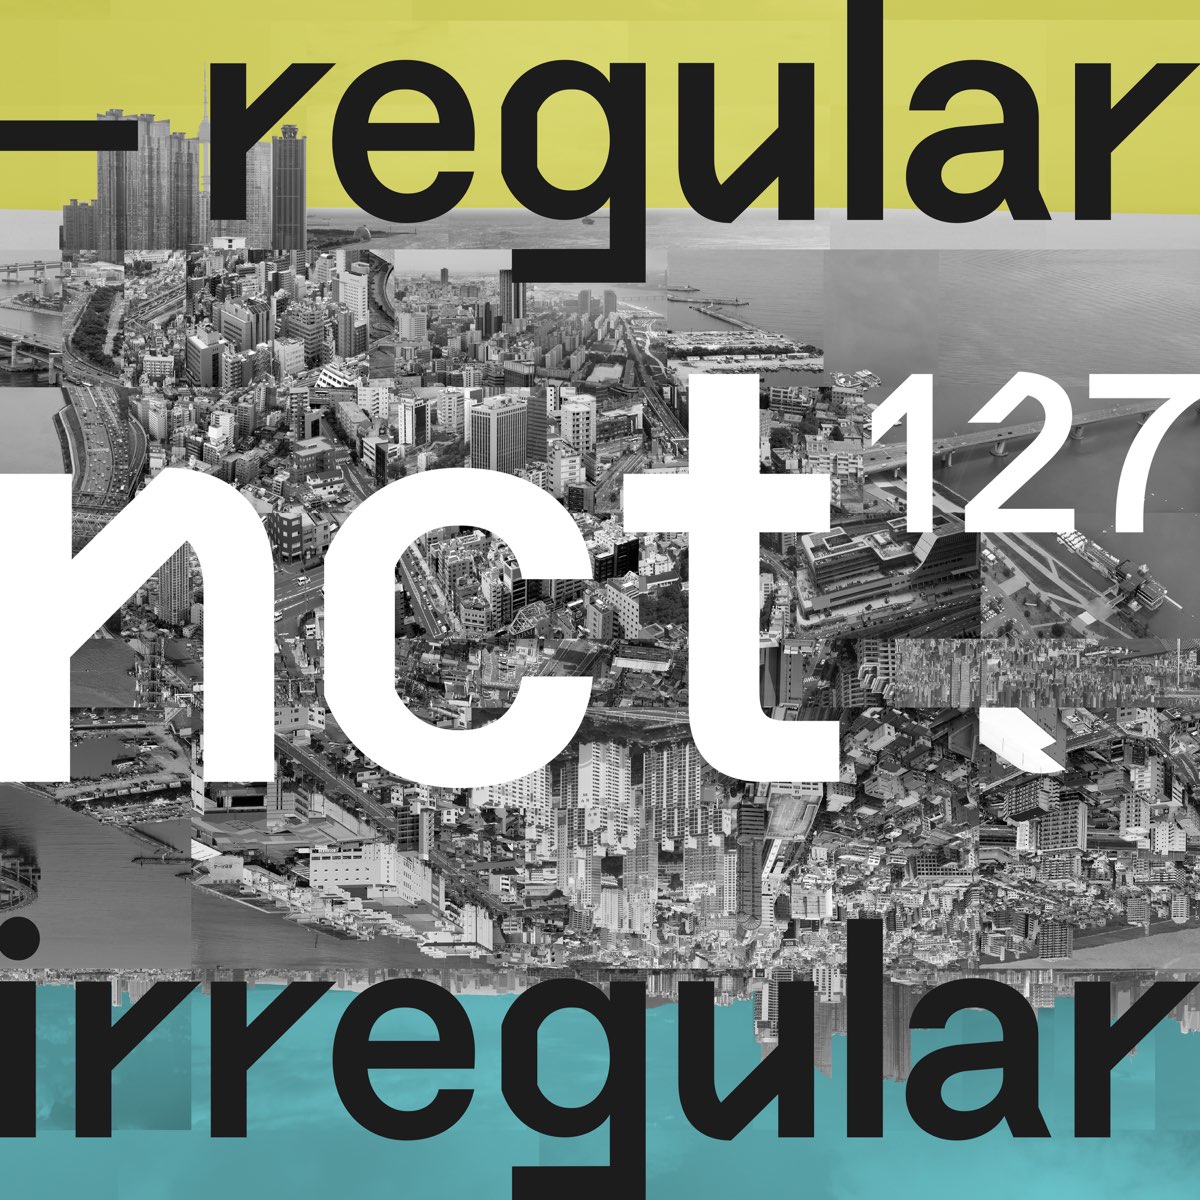 NCT 127 Regular-Irregular cover artwork